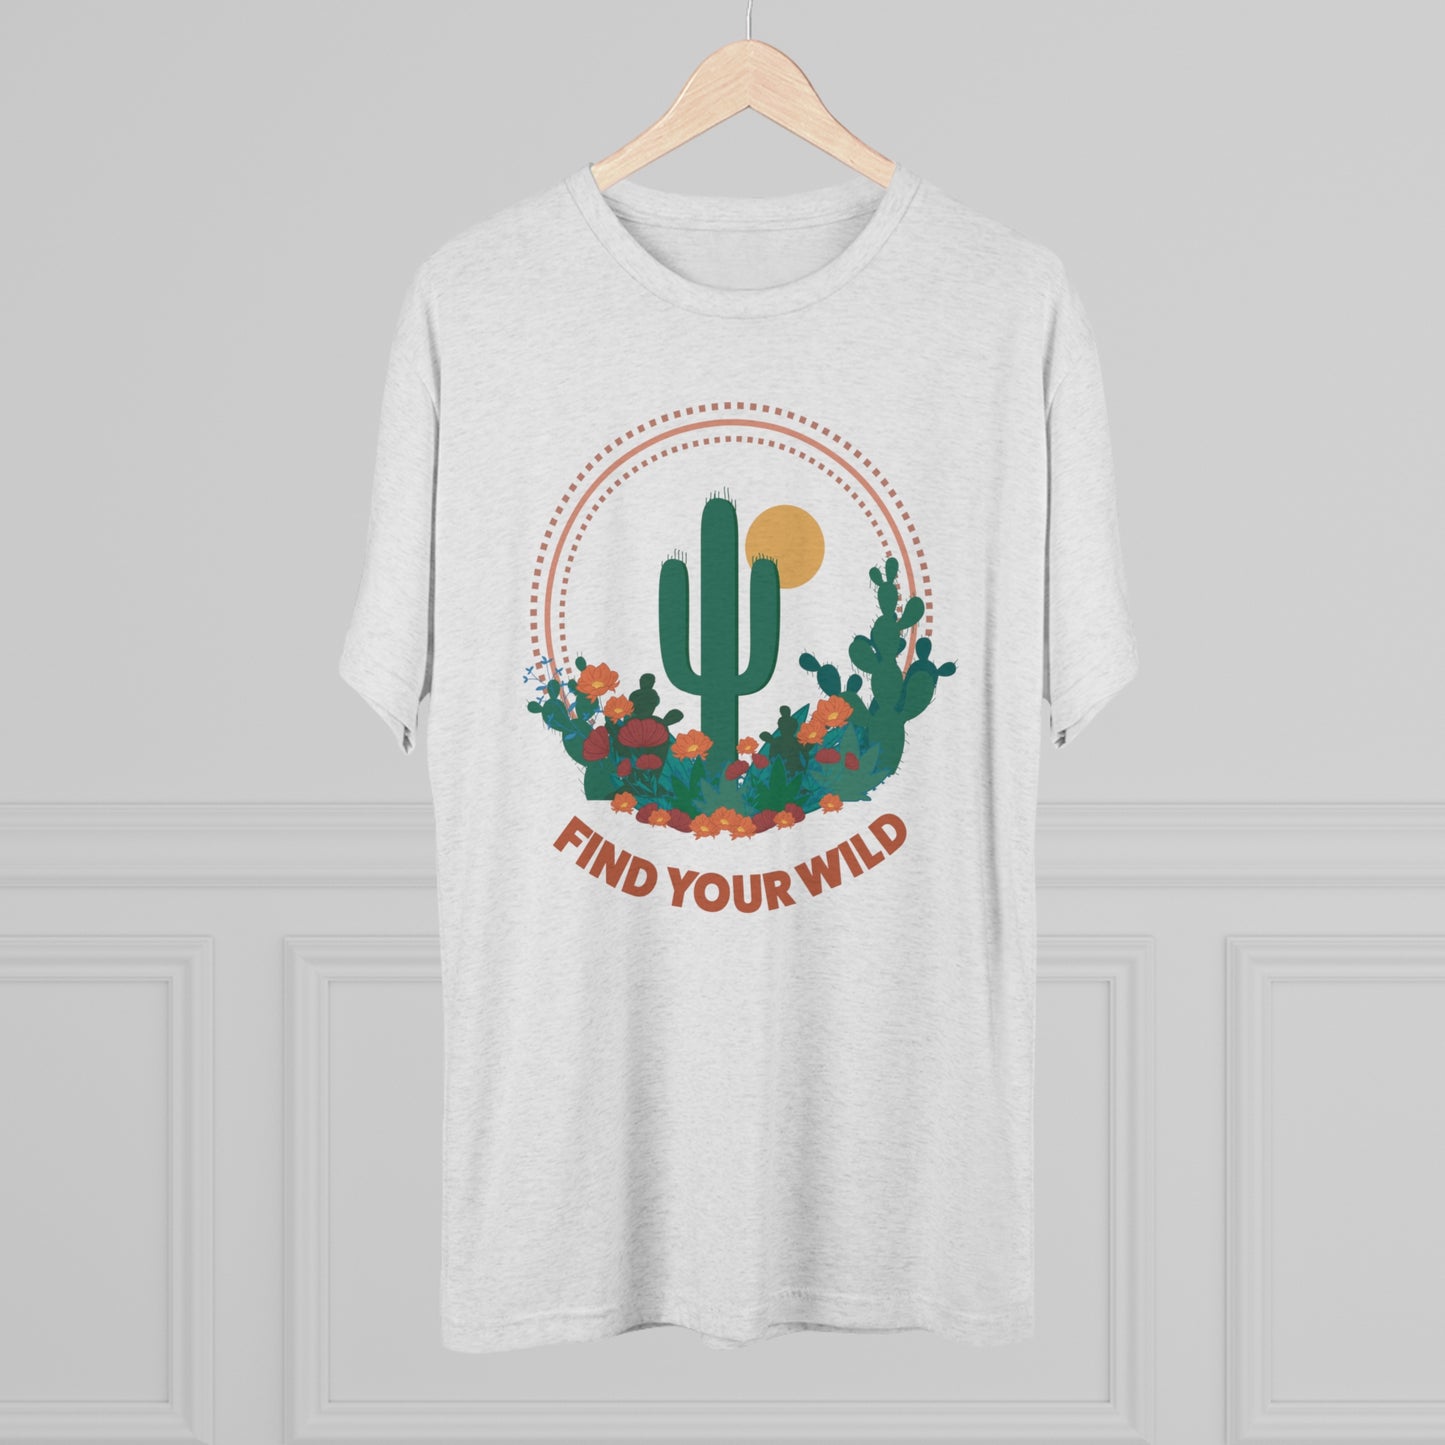 Find Your Wild Cactus Desert Unisex Tri-Blend Crew Tee